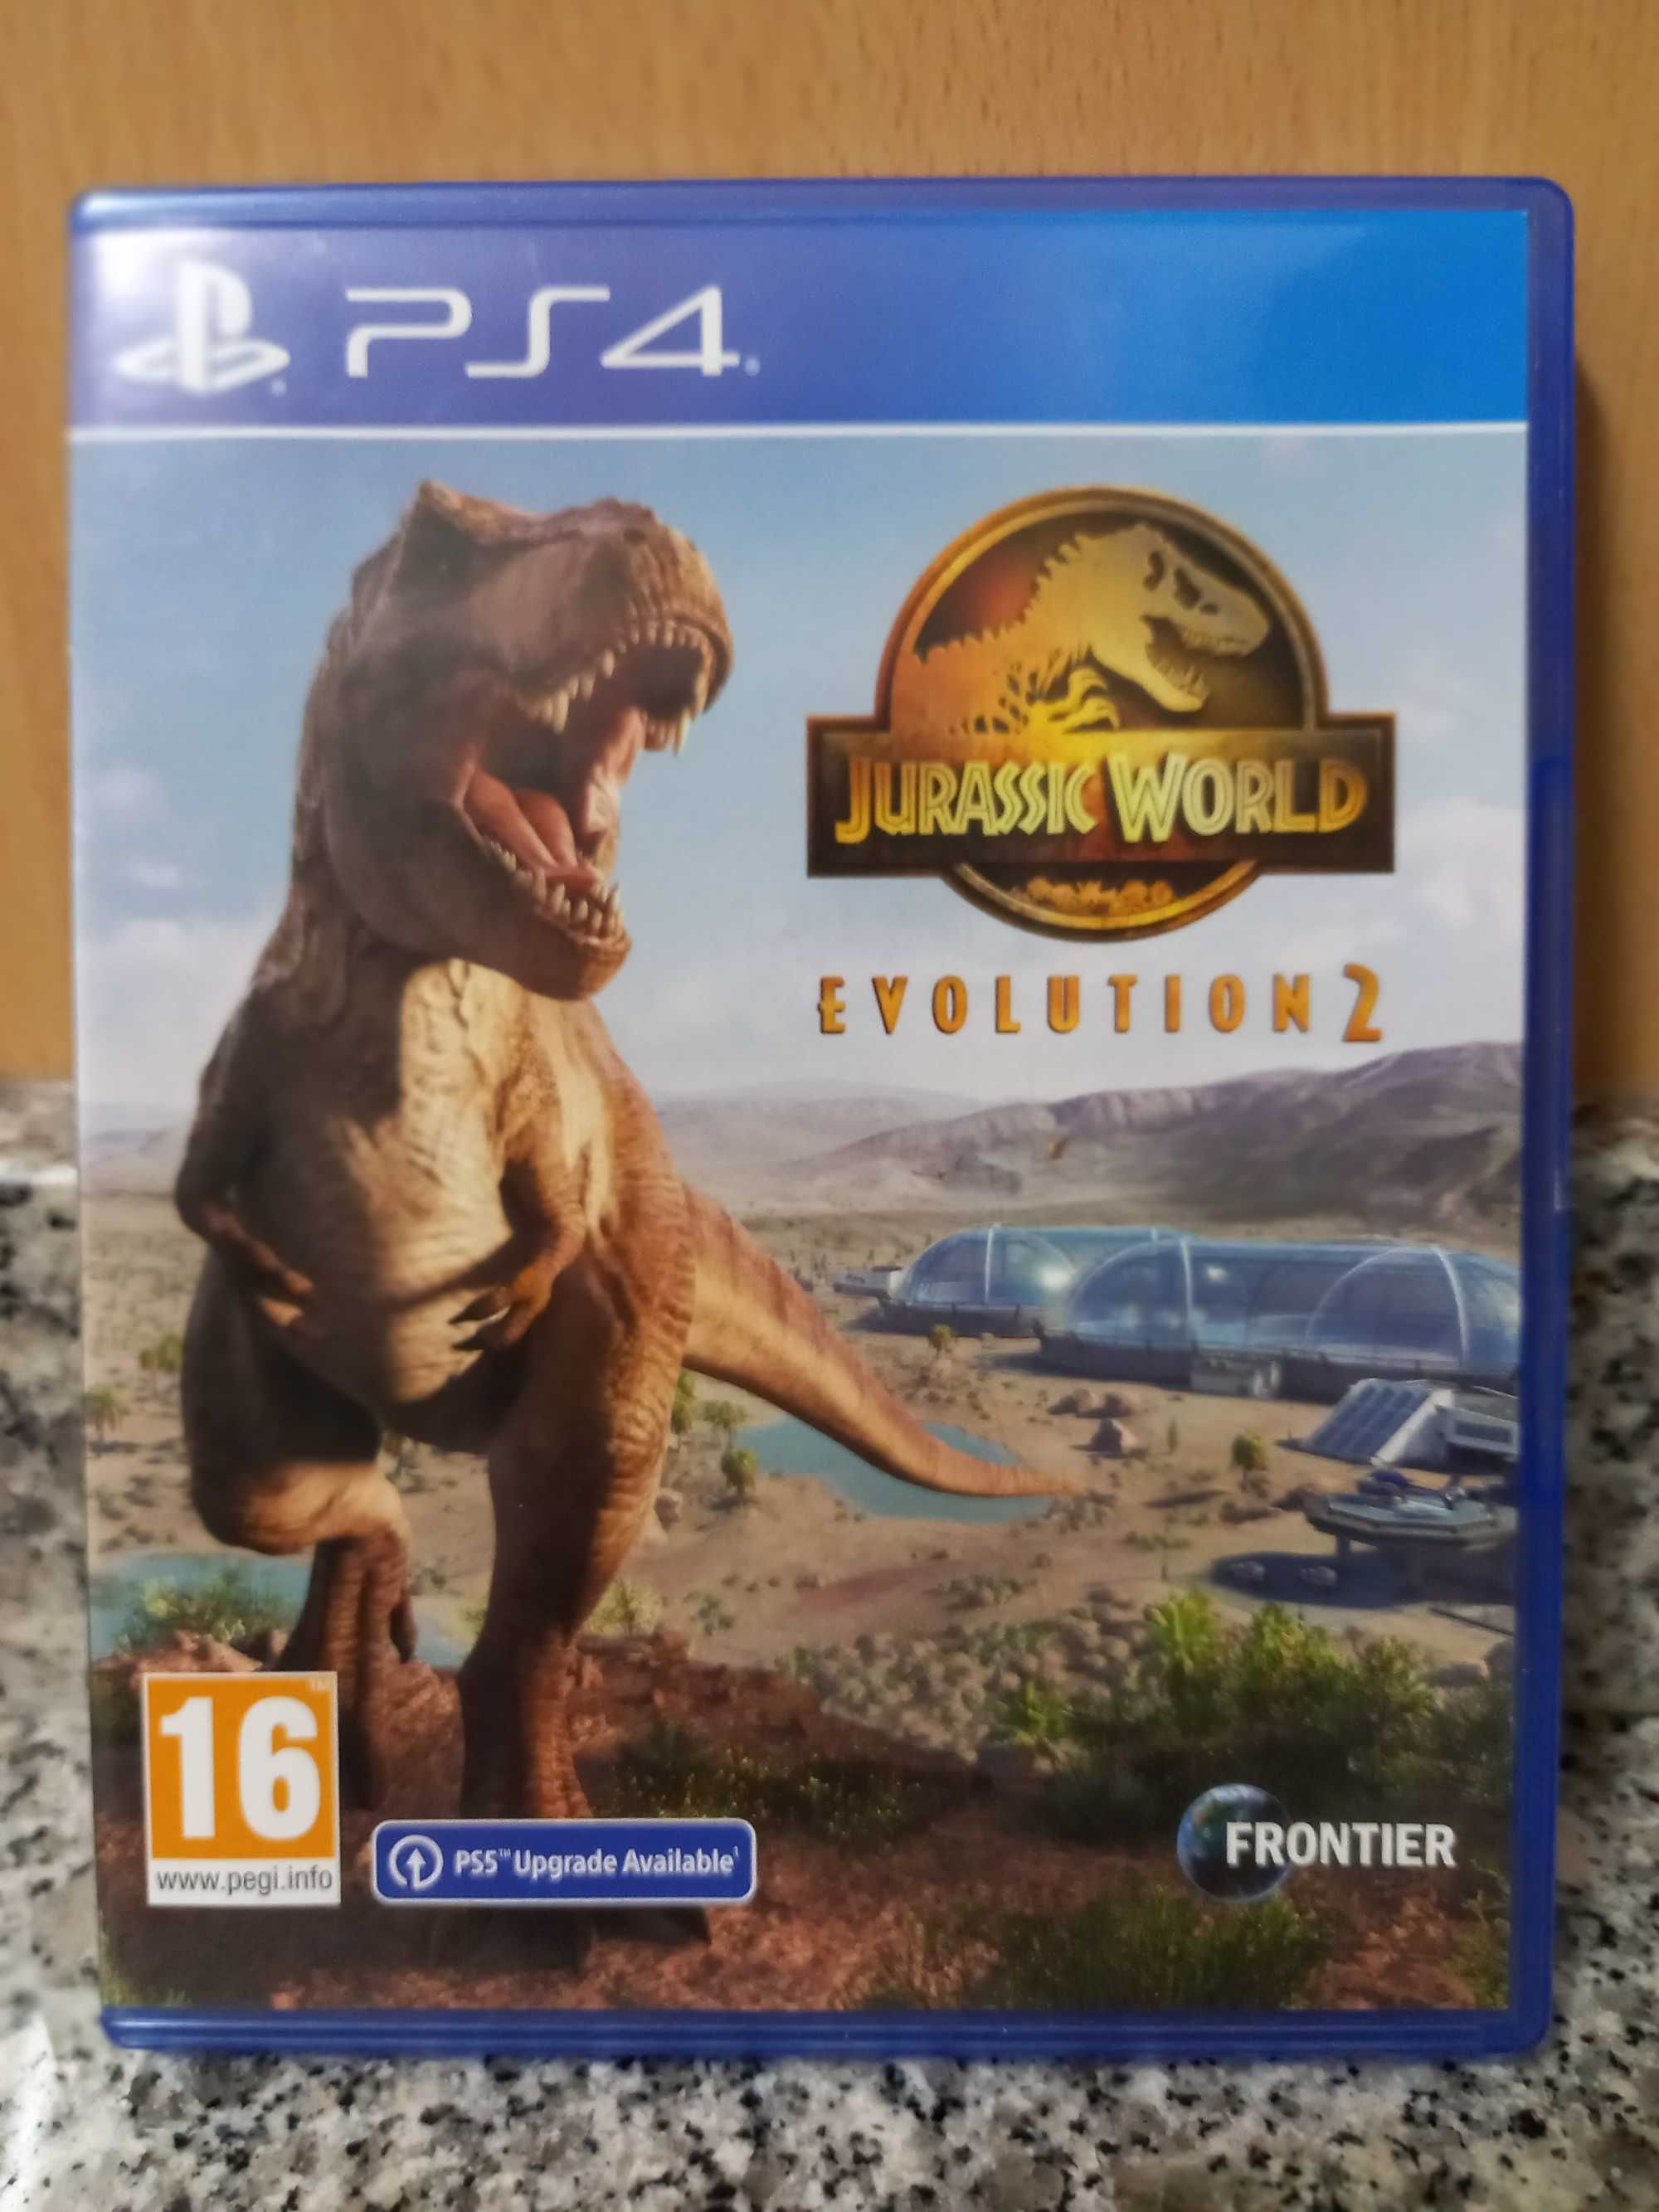 Jurassic world evolution 2 PS4